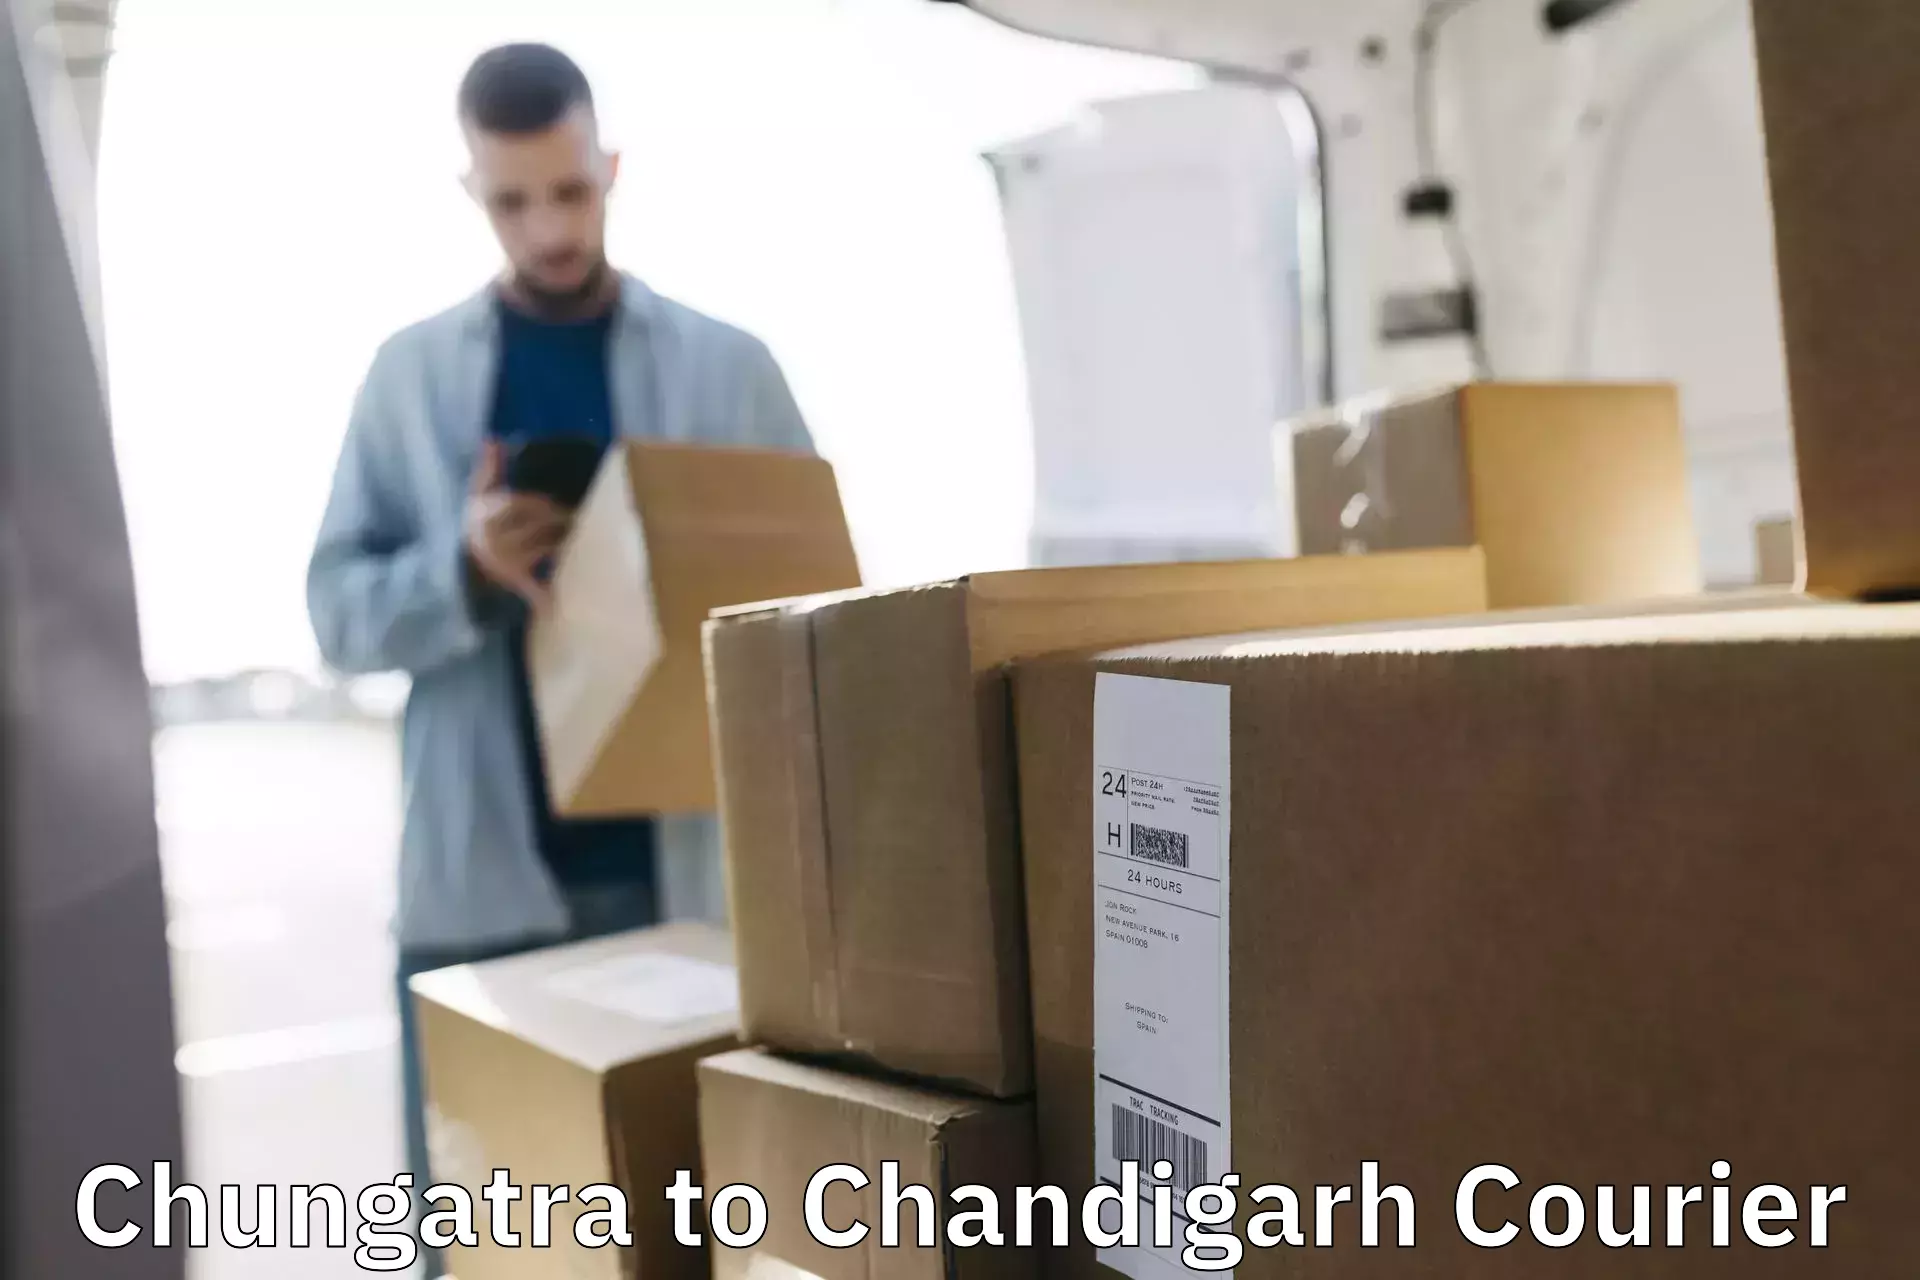 Overnight delivery services Chungatra to Kharar